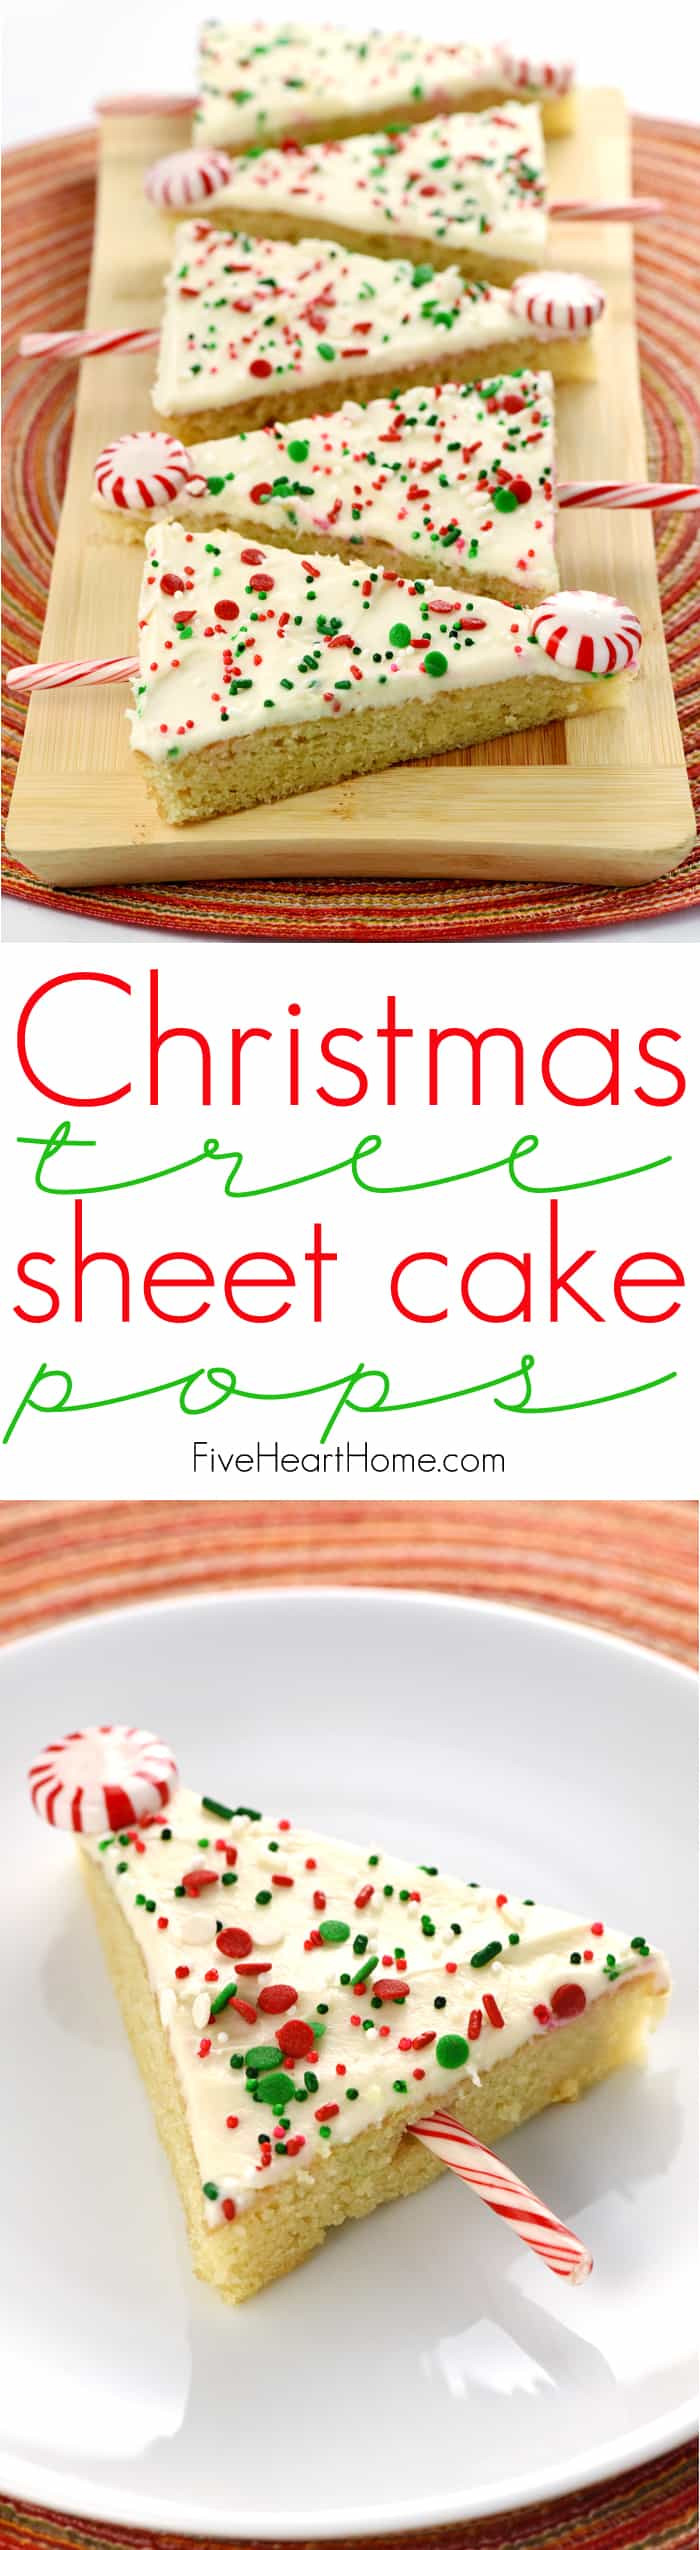 Christmas Sheet Cake
 Christmas Tree Sheet Cake Pops tender vanilla sheet cake